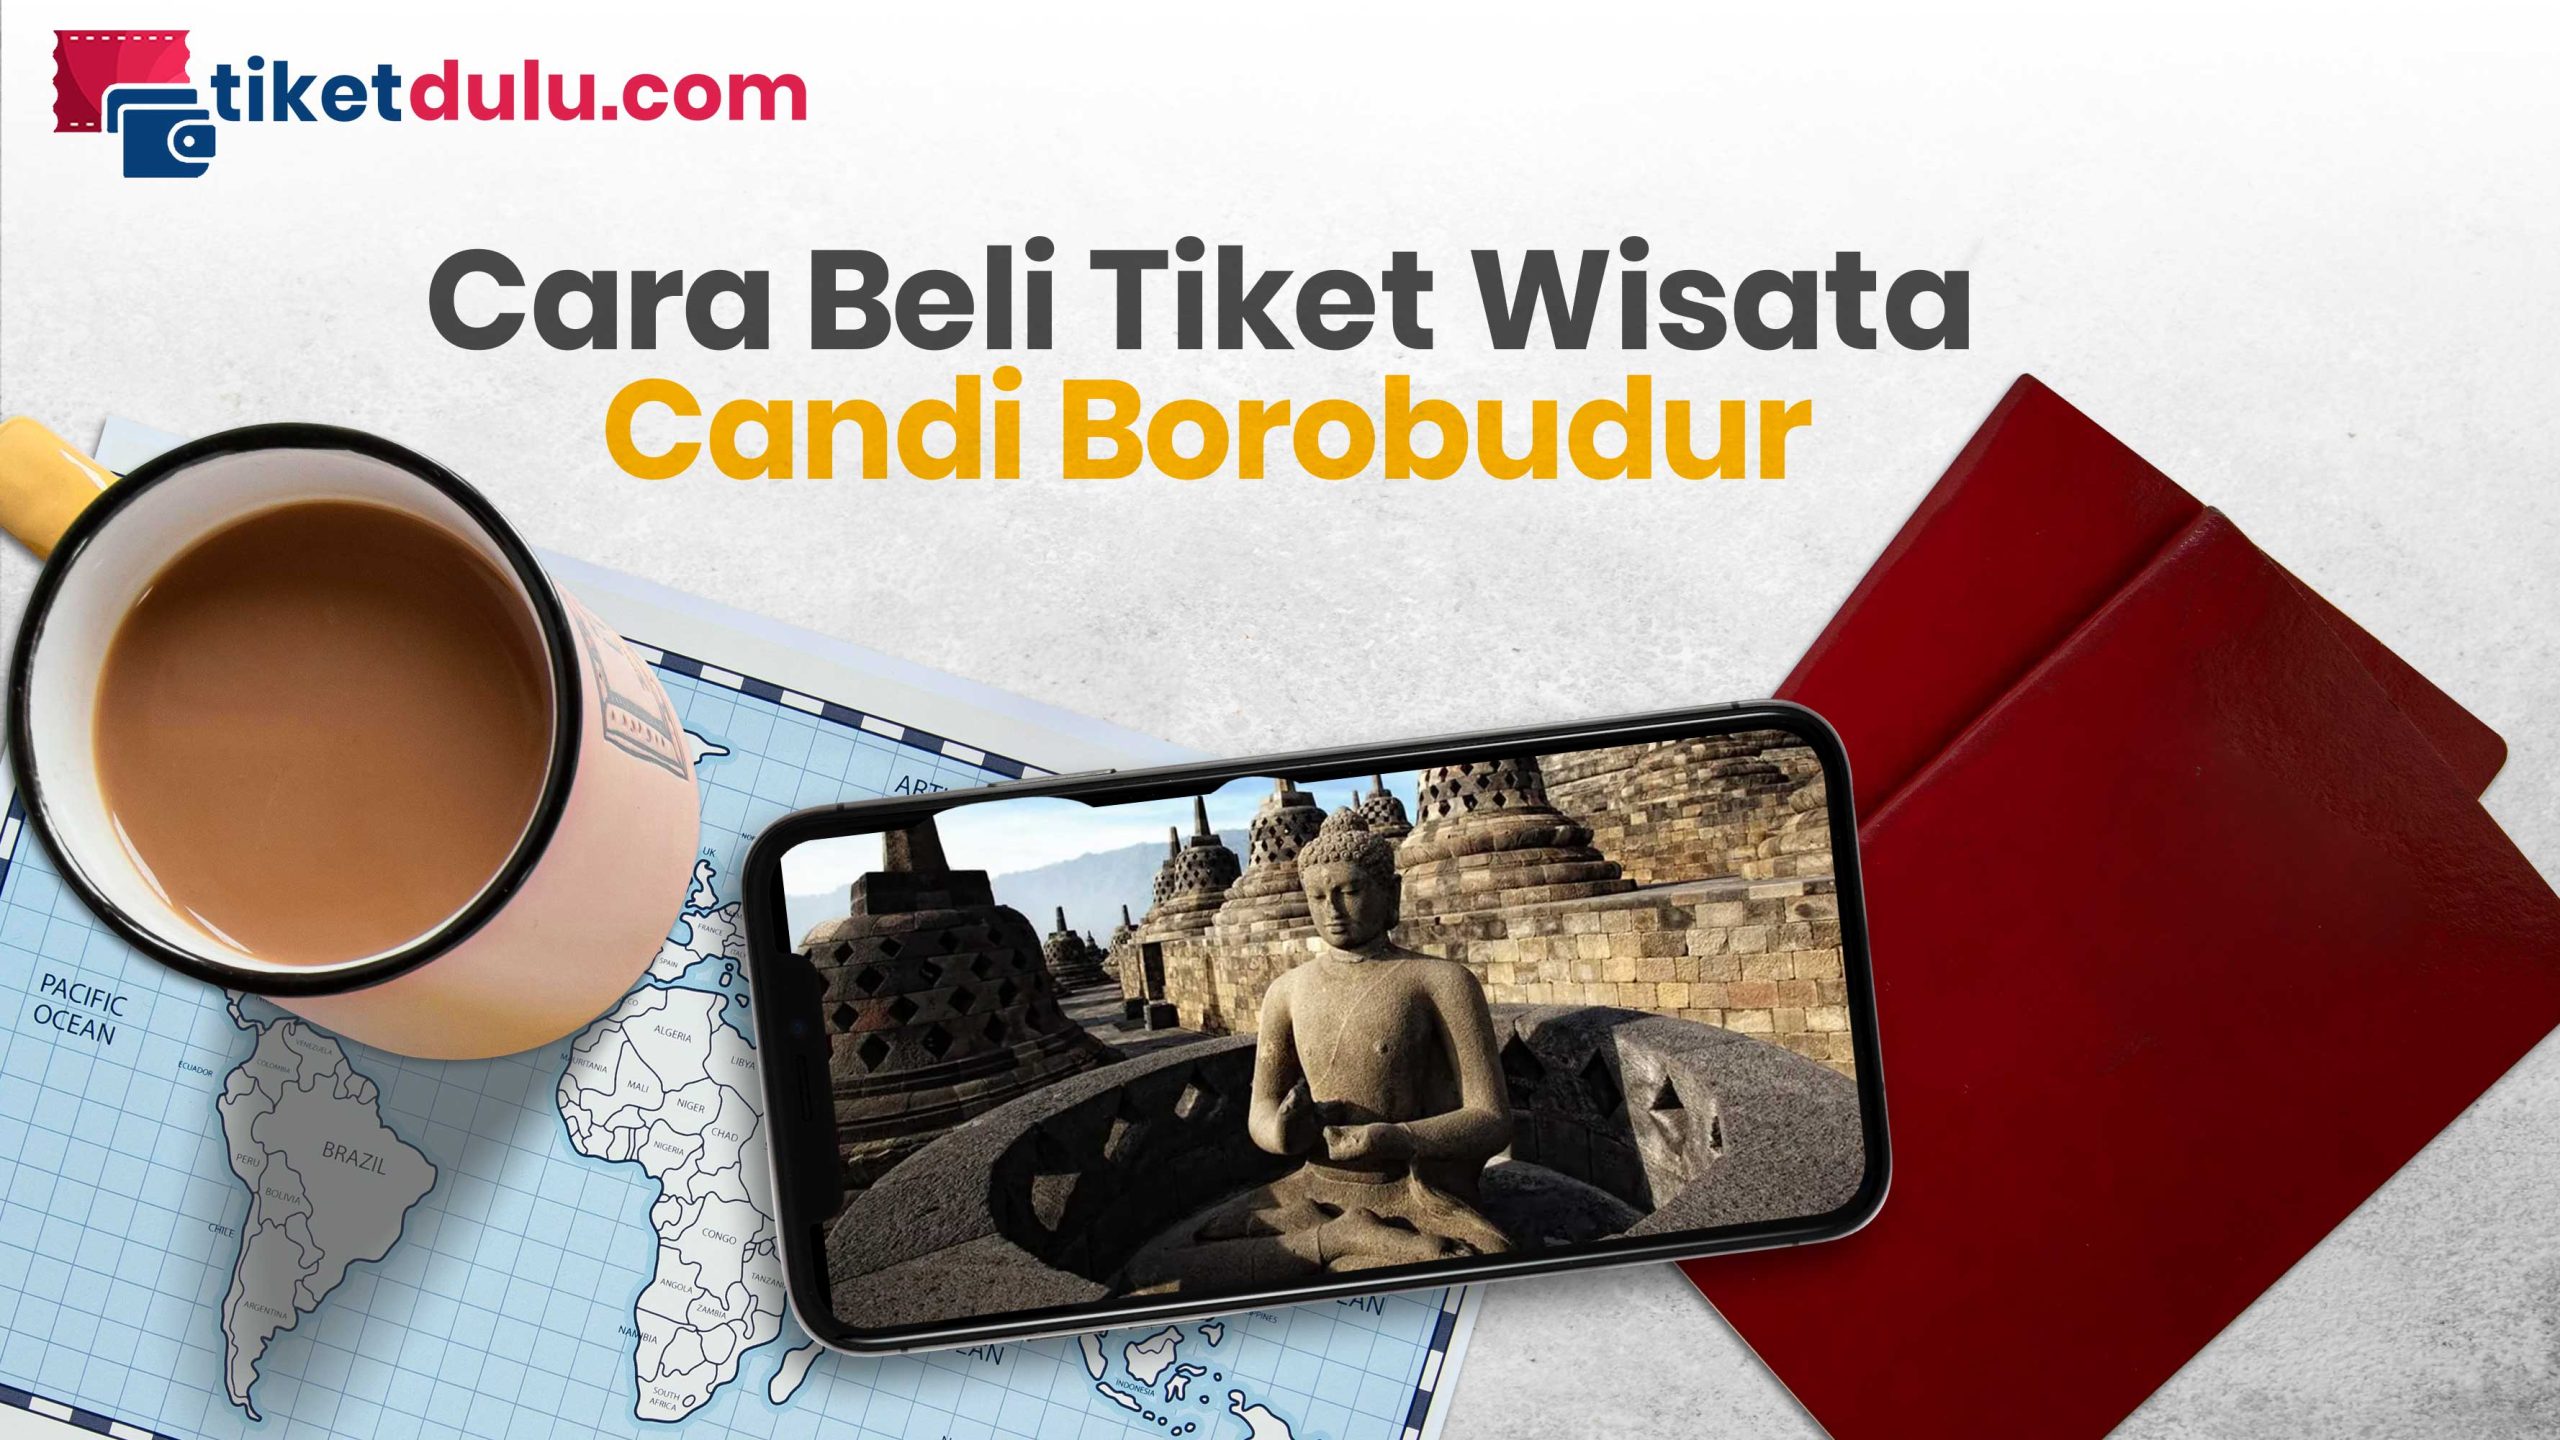 Cara Beli Tiket Wisata Candi Borobudur Secara Online